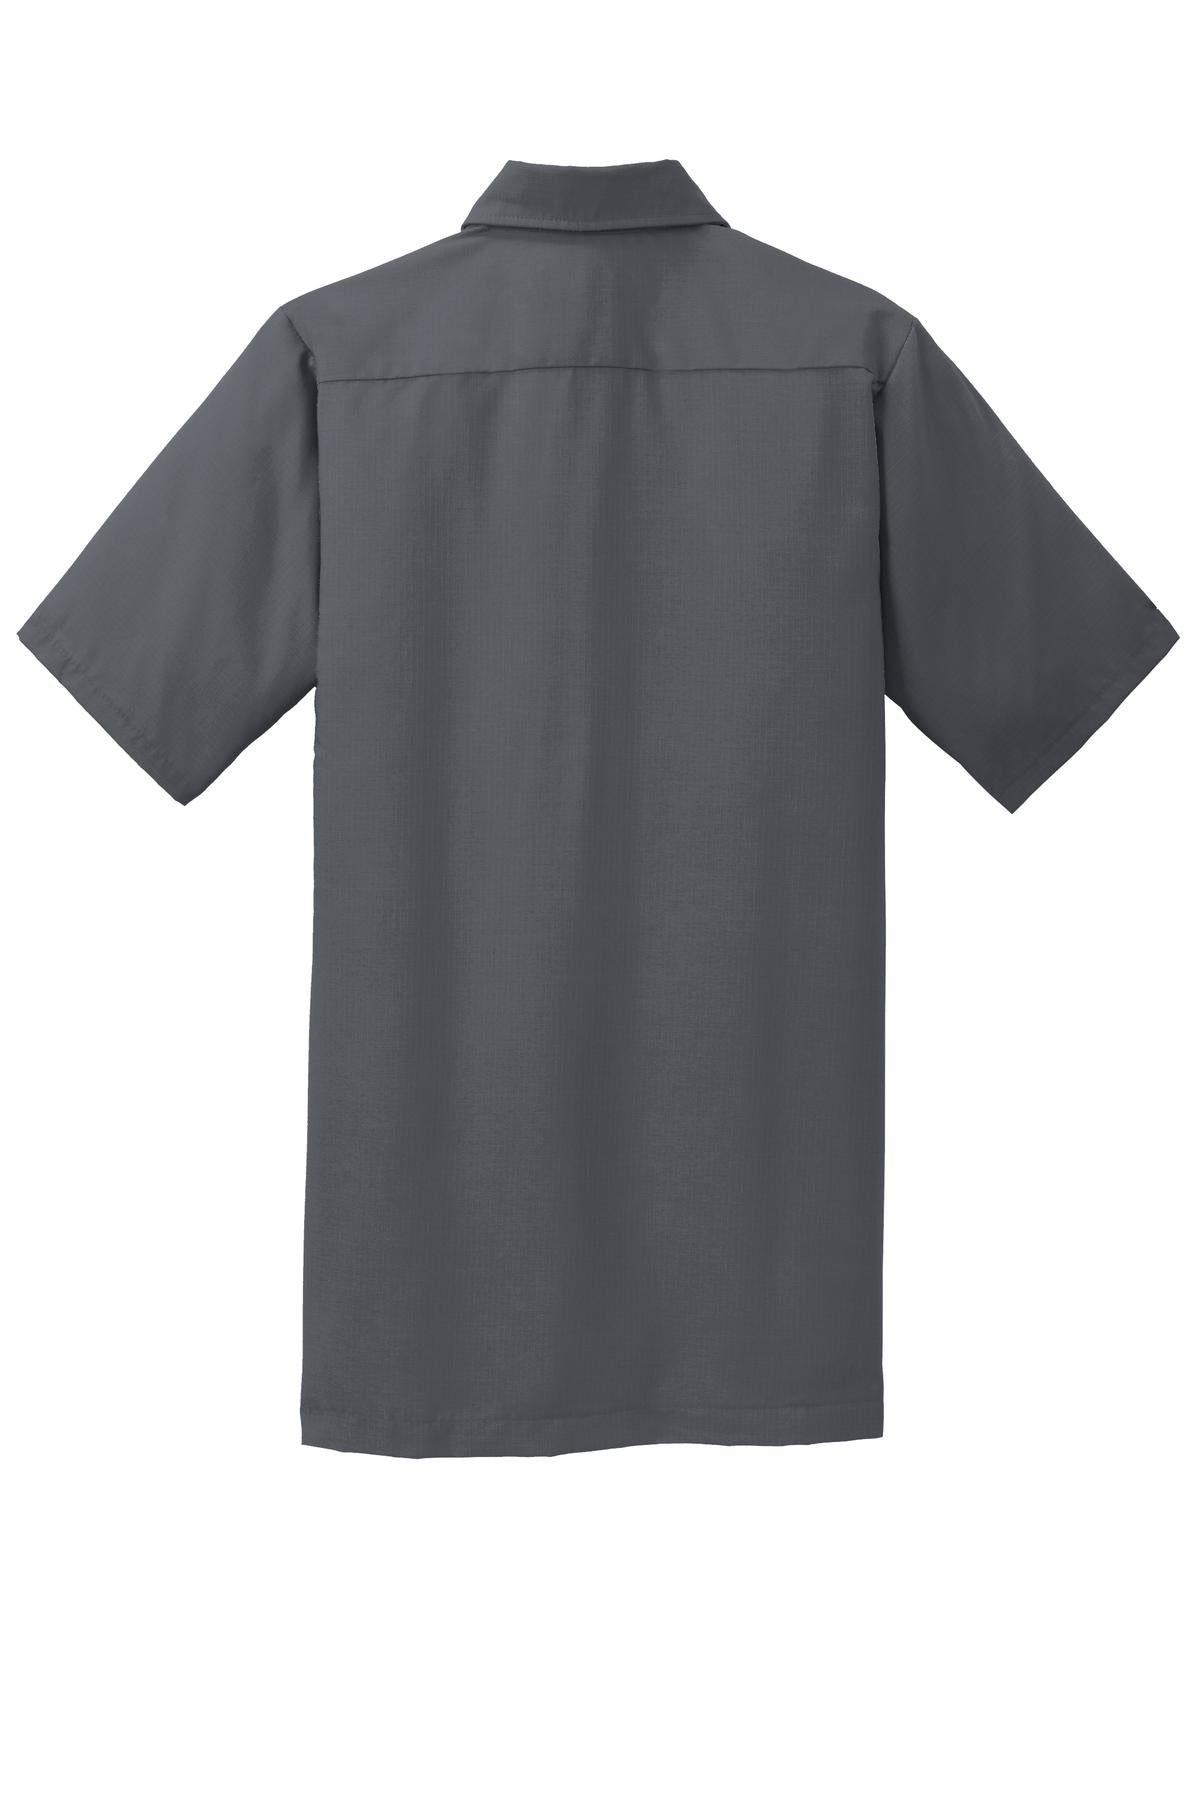 Red Kap Short Sleeve Solid Ripstop Shirt. SY60